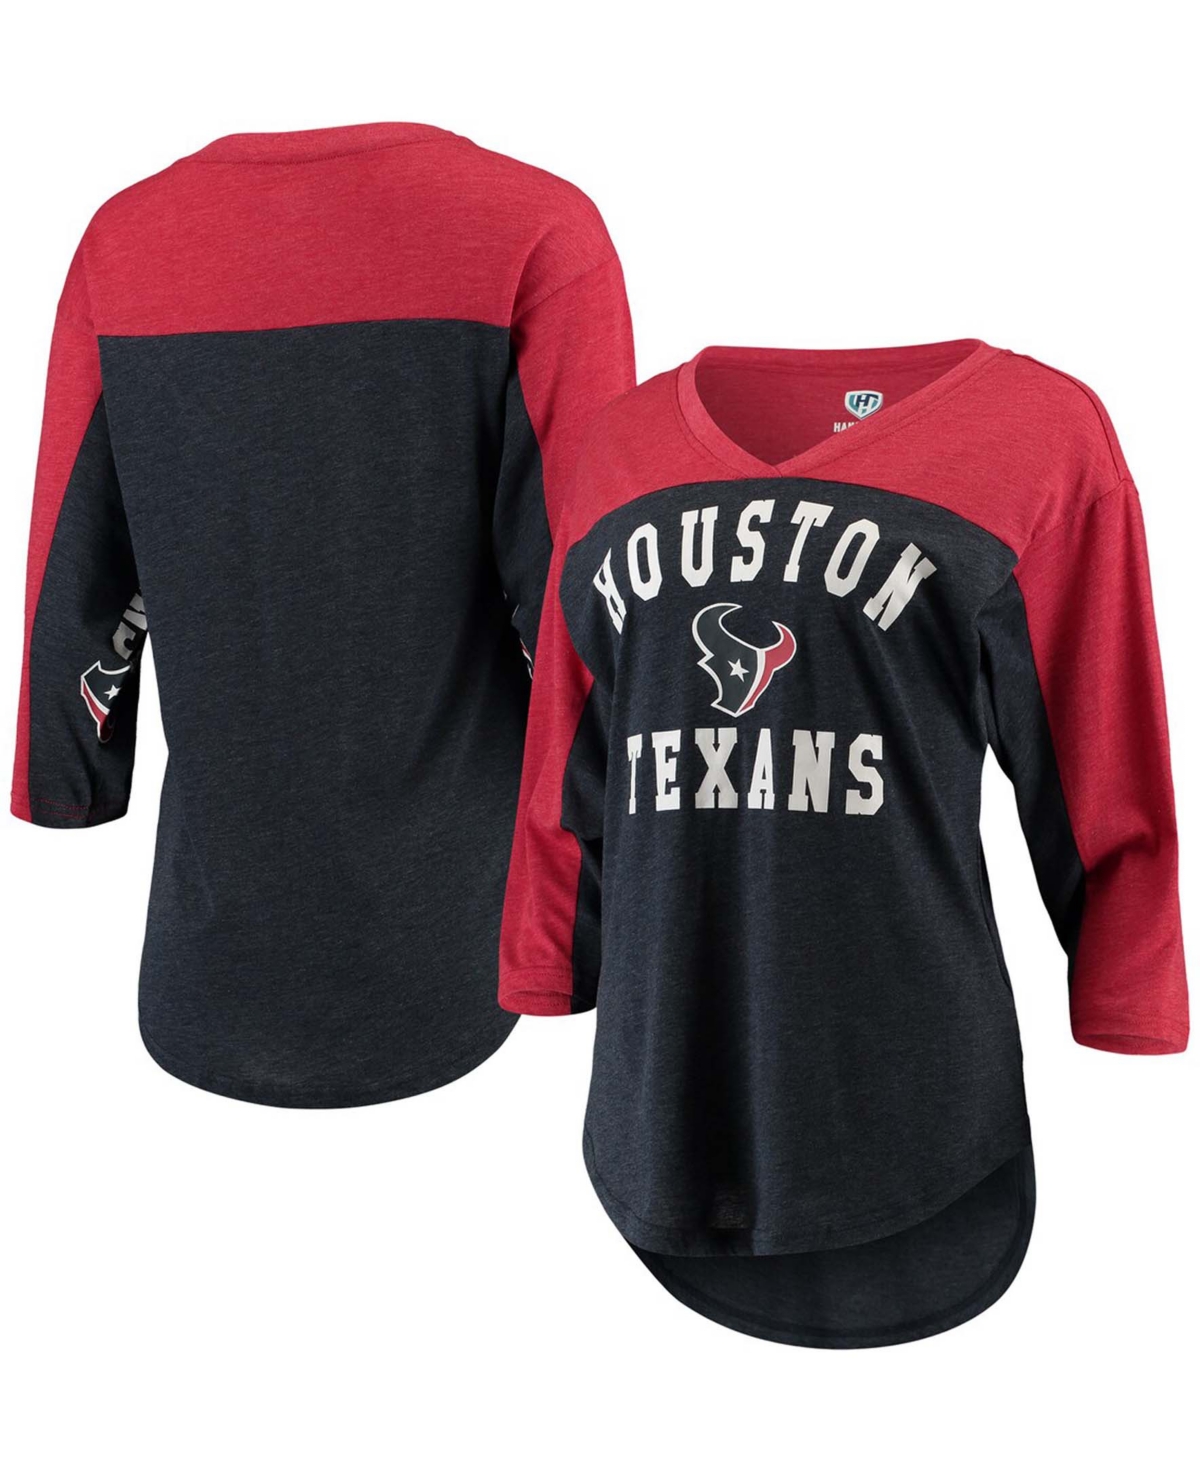 Women's Navy, Red Houston Texans In The Zone 3/4 Sleeve V-Neck T-shirt